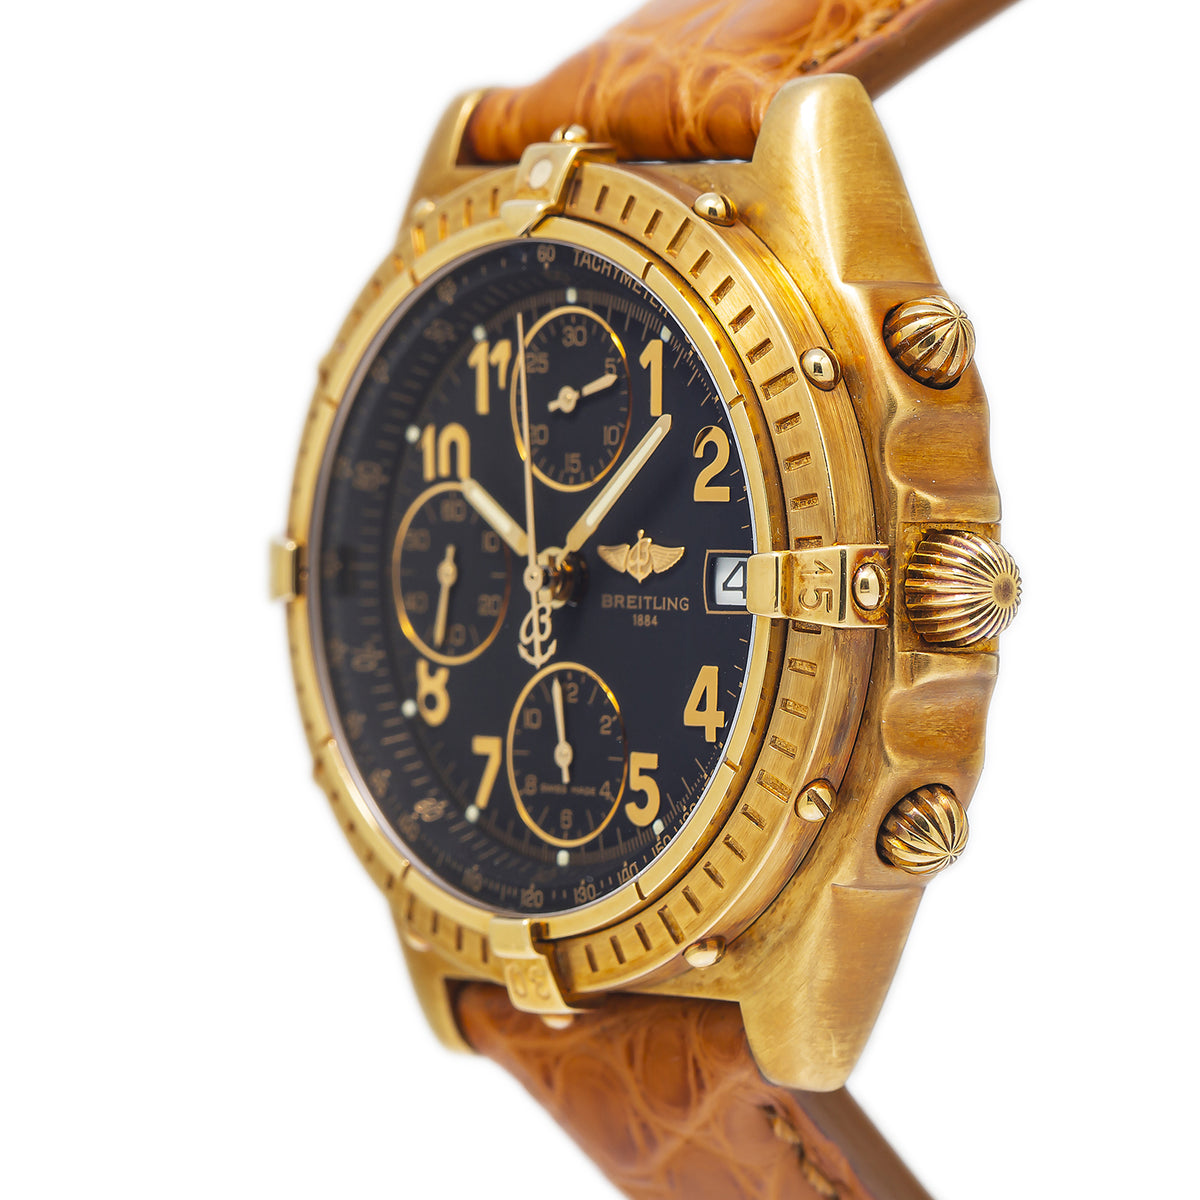 Breitling Chronomat K13048 1996 Complete UNPOLISHED 18k Black Dial Watch 40mm